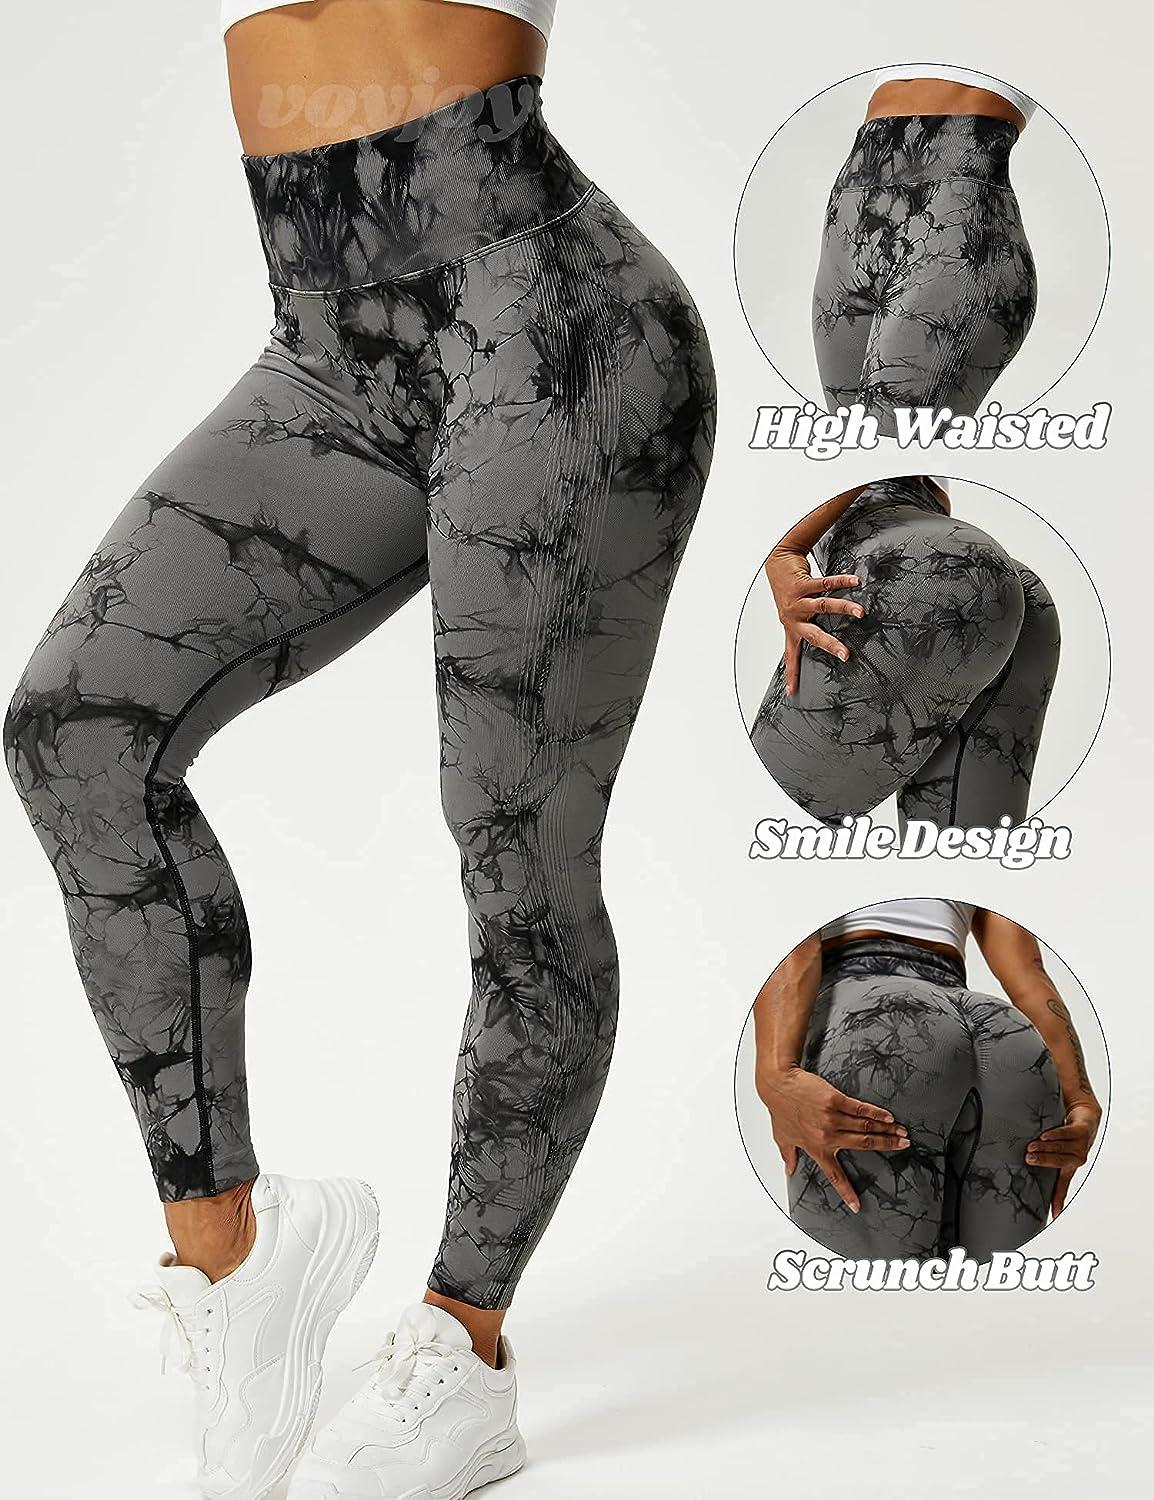 Buy VOYJOY Tie Dye Seamless Leggings for Women High Waist Yoga Pants,  Scrunch Butt Lifting Elastic Tights online